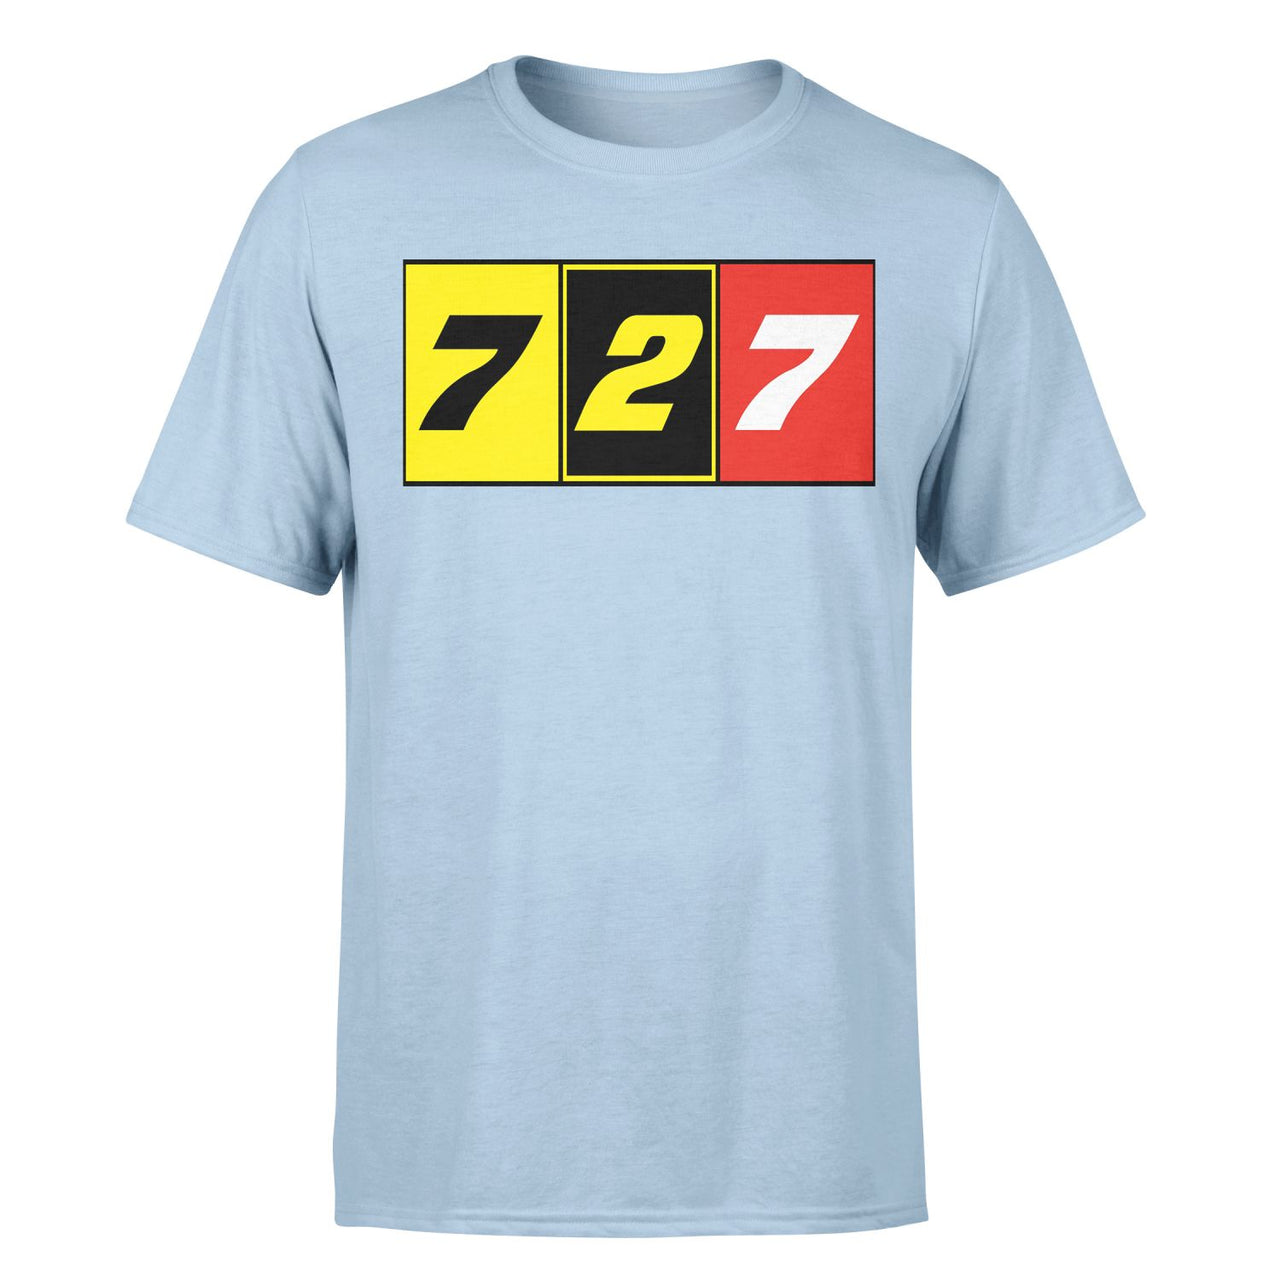 Flat Colourful 727 Designed T-Shirts